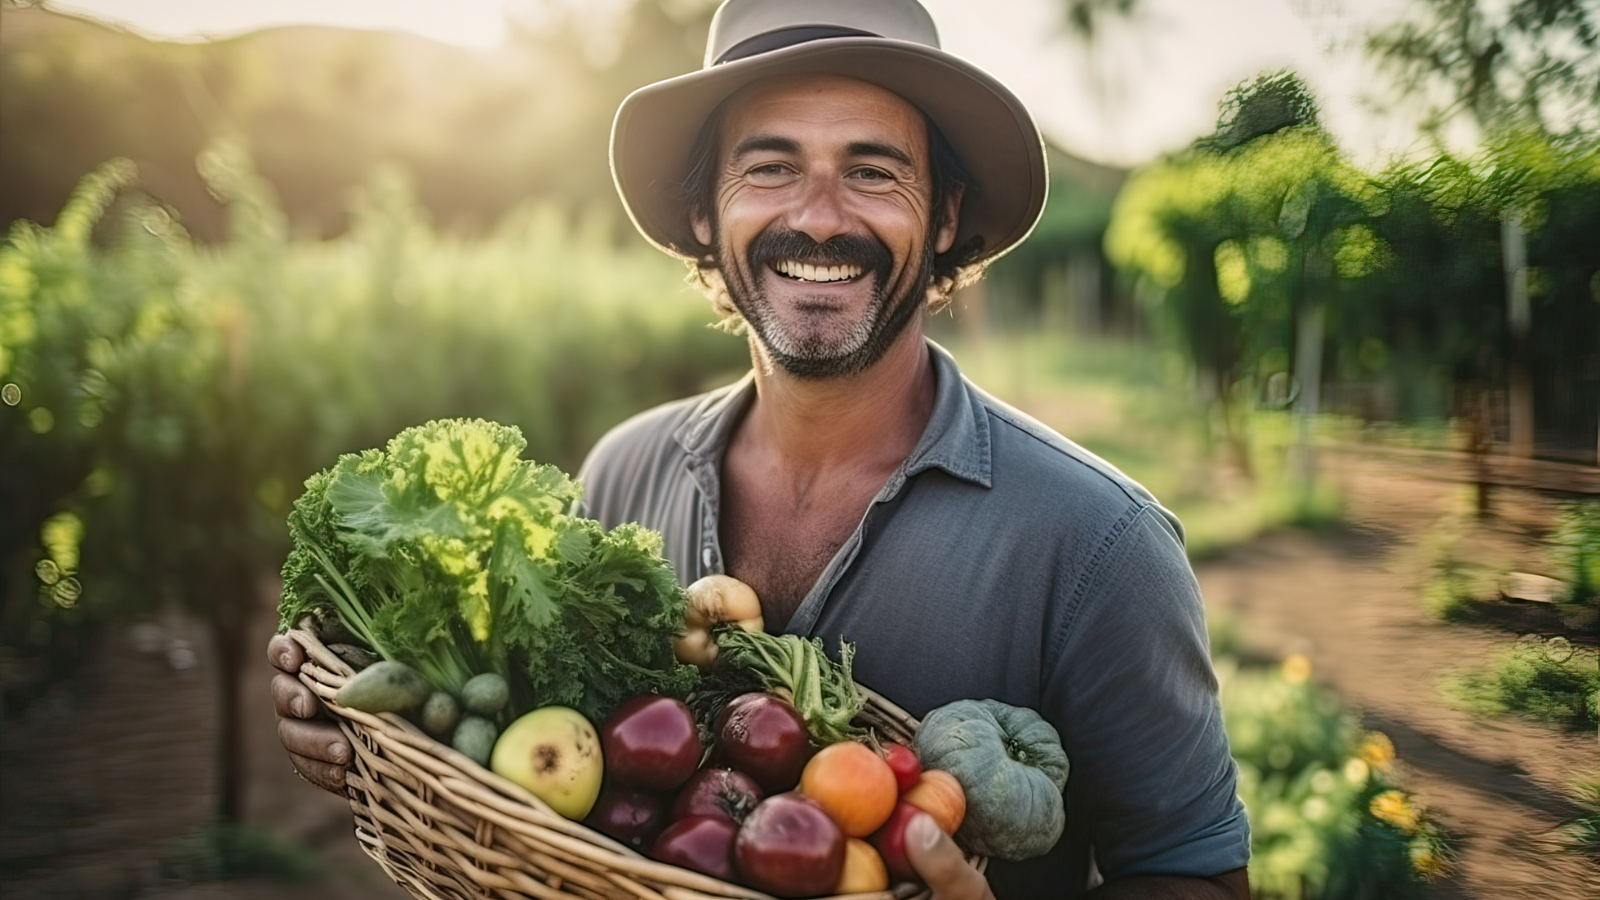 A man holding a basket of fresh produce.